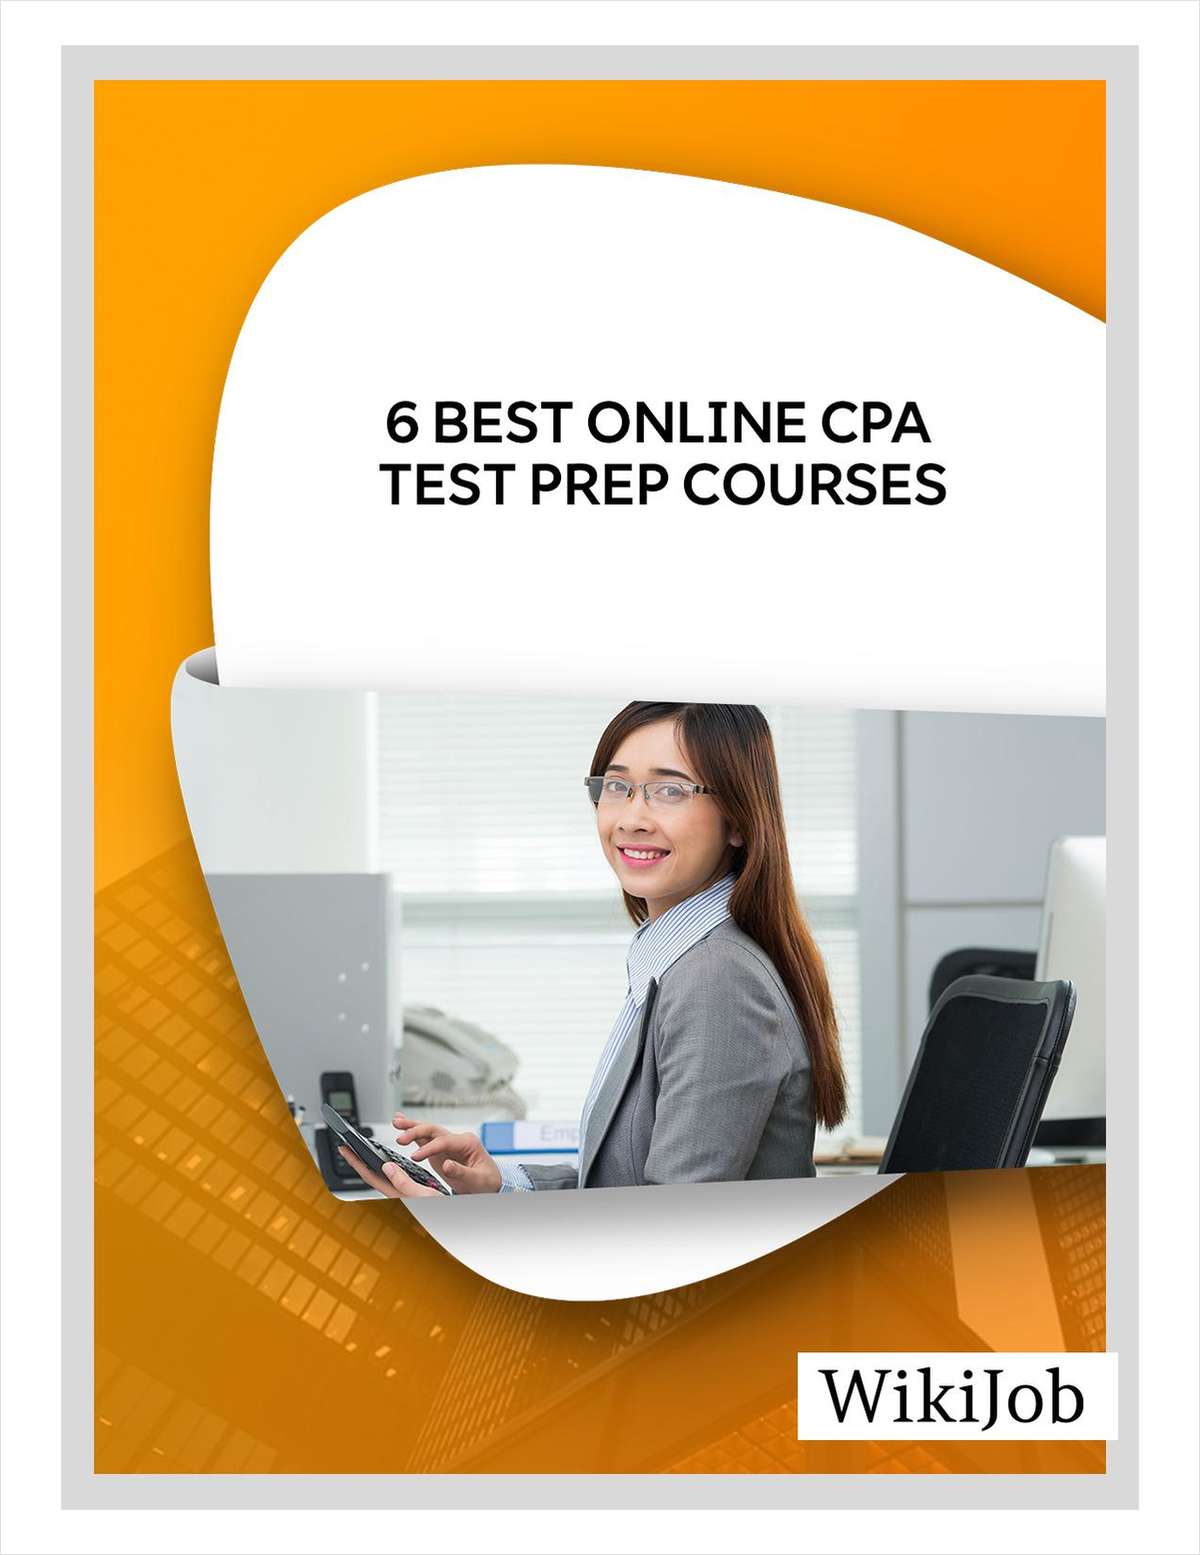 6 Best Online CPA Test Prep Courses